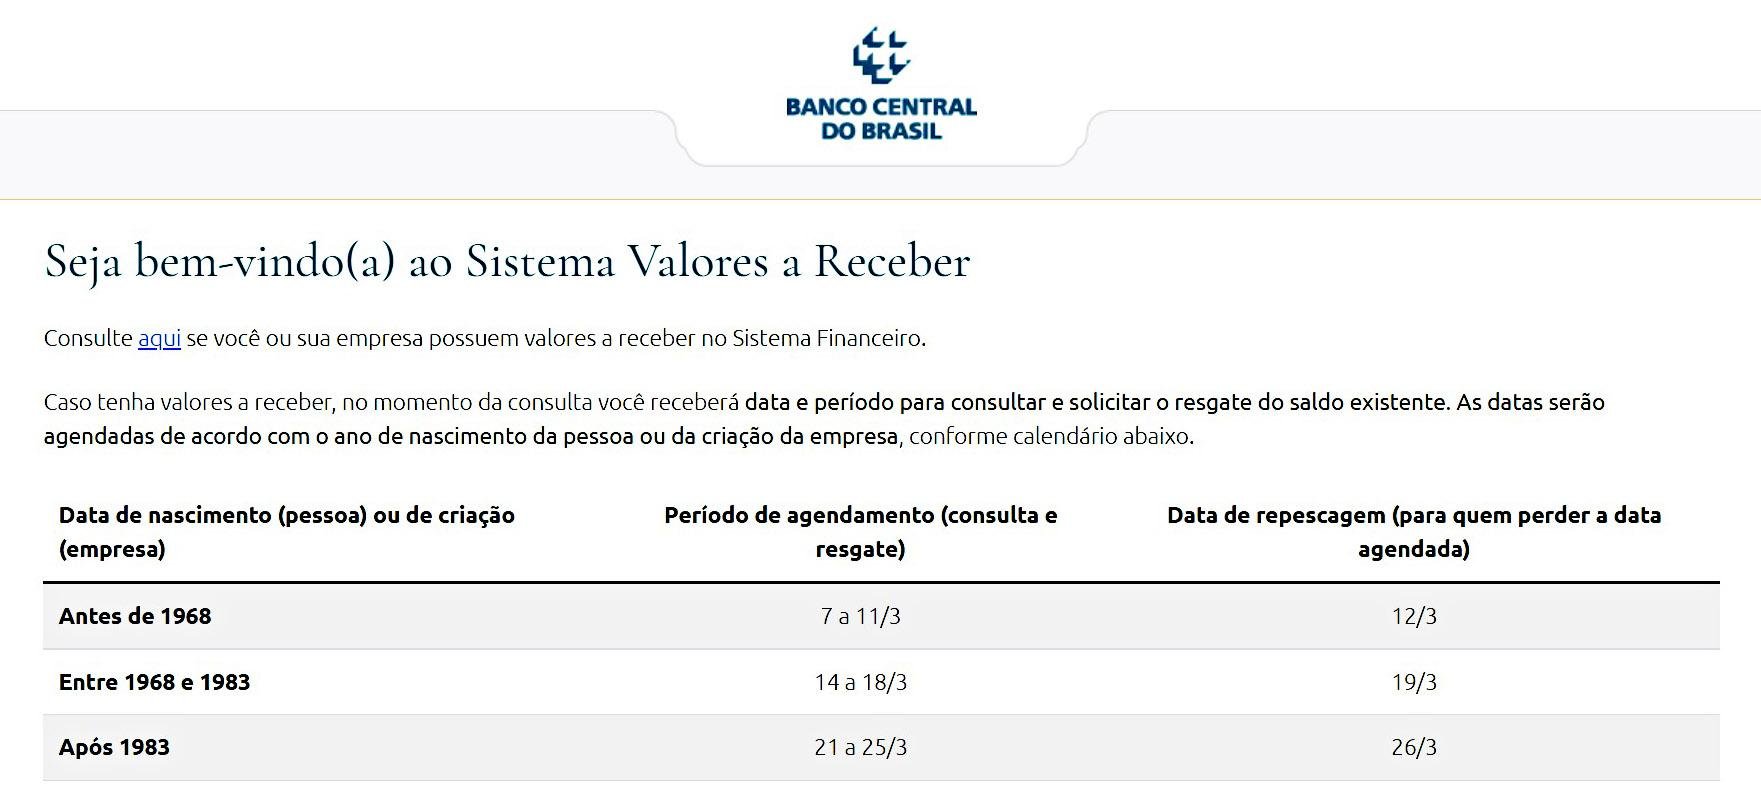 Fonte: Banco Central do Brasil/captura de tela.